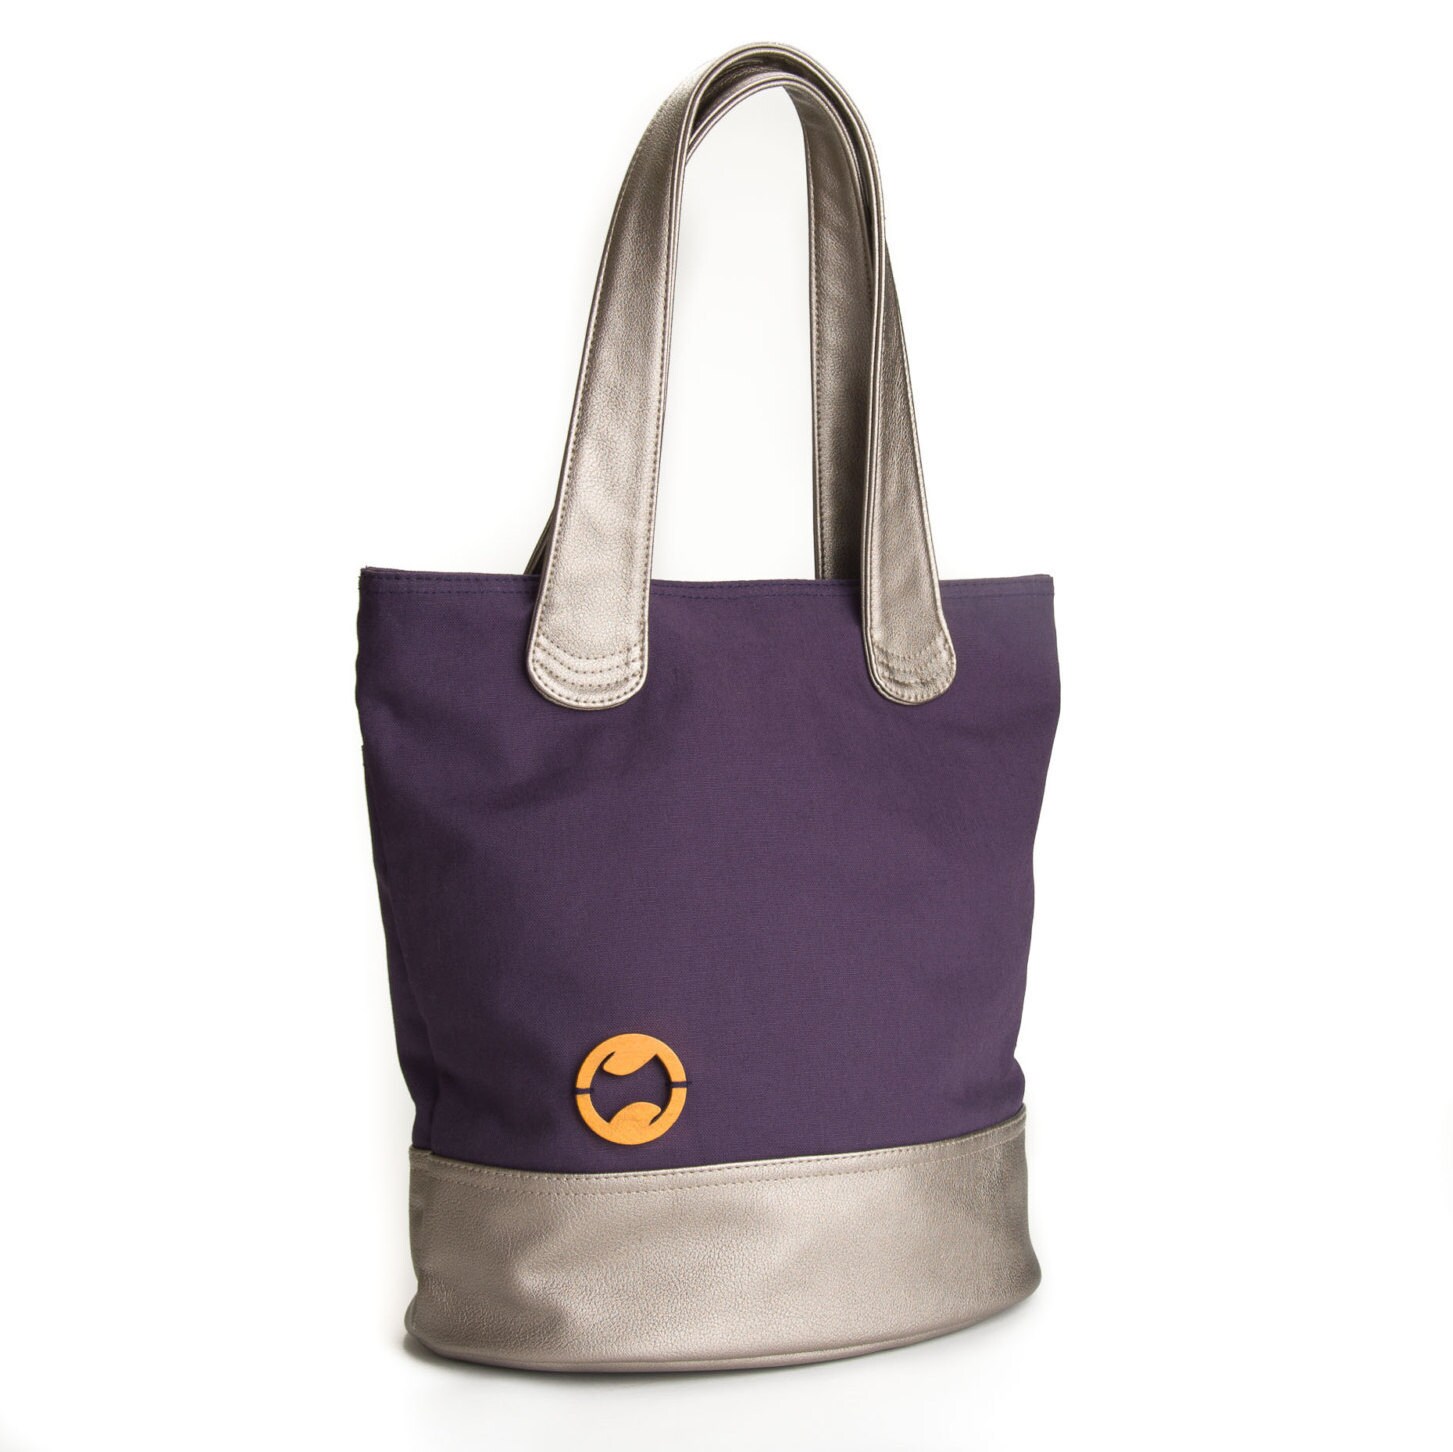 vegan handbag with organic cotton bucket tote by CanopyVerde